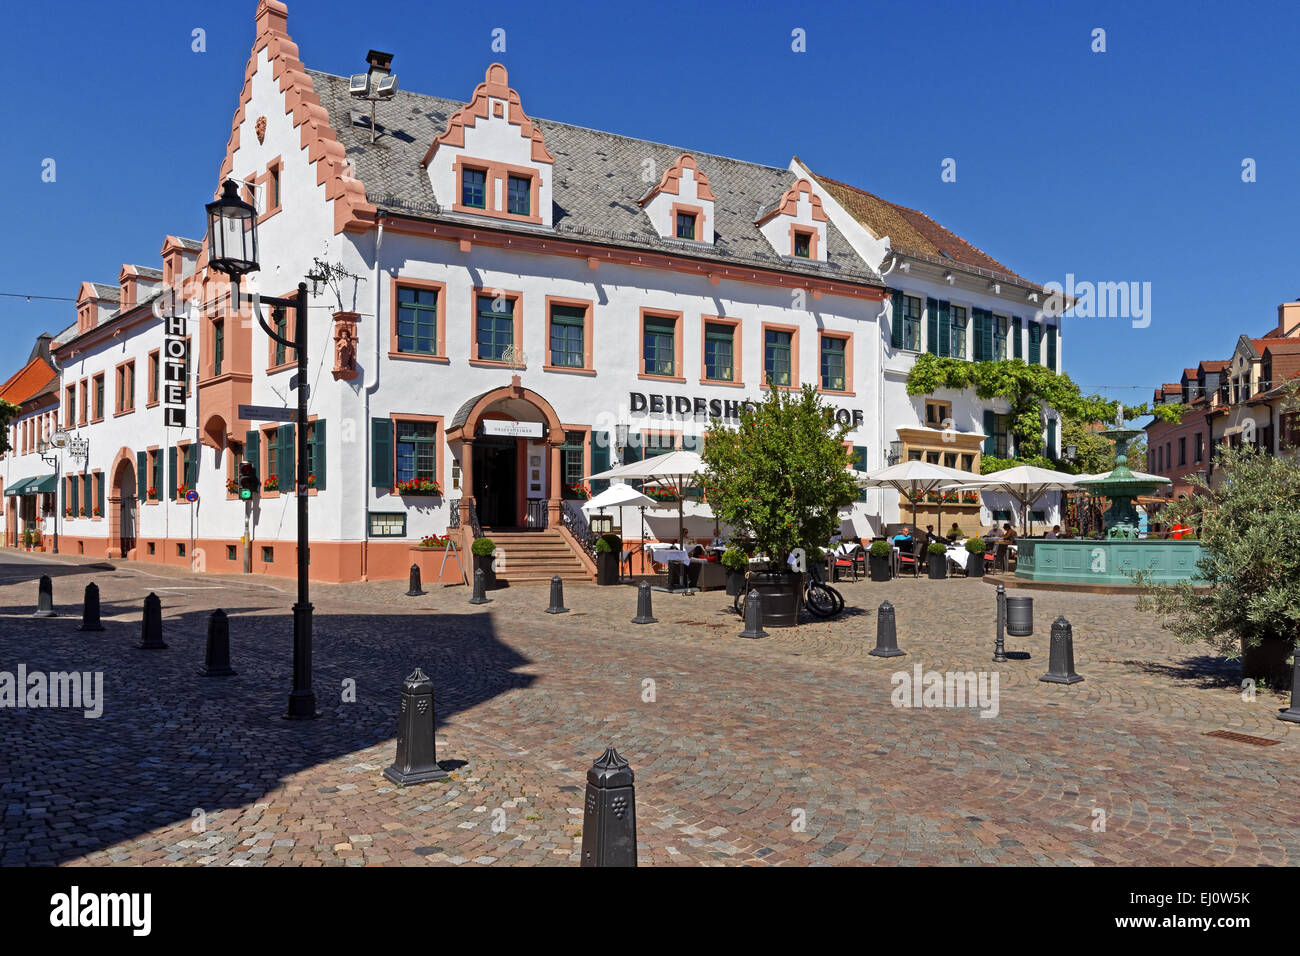 Europe, Germany, Europe, Rhineland-Palatinate, Deidesheim, German wine route, marketplace, Andreas's well, Deidesheimer Hof, hote Stock Photo